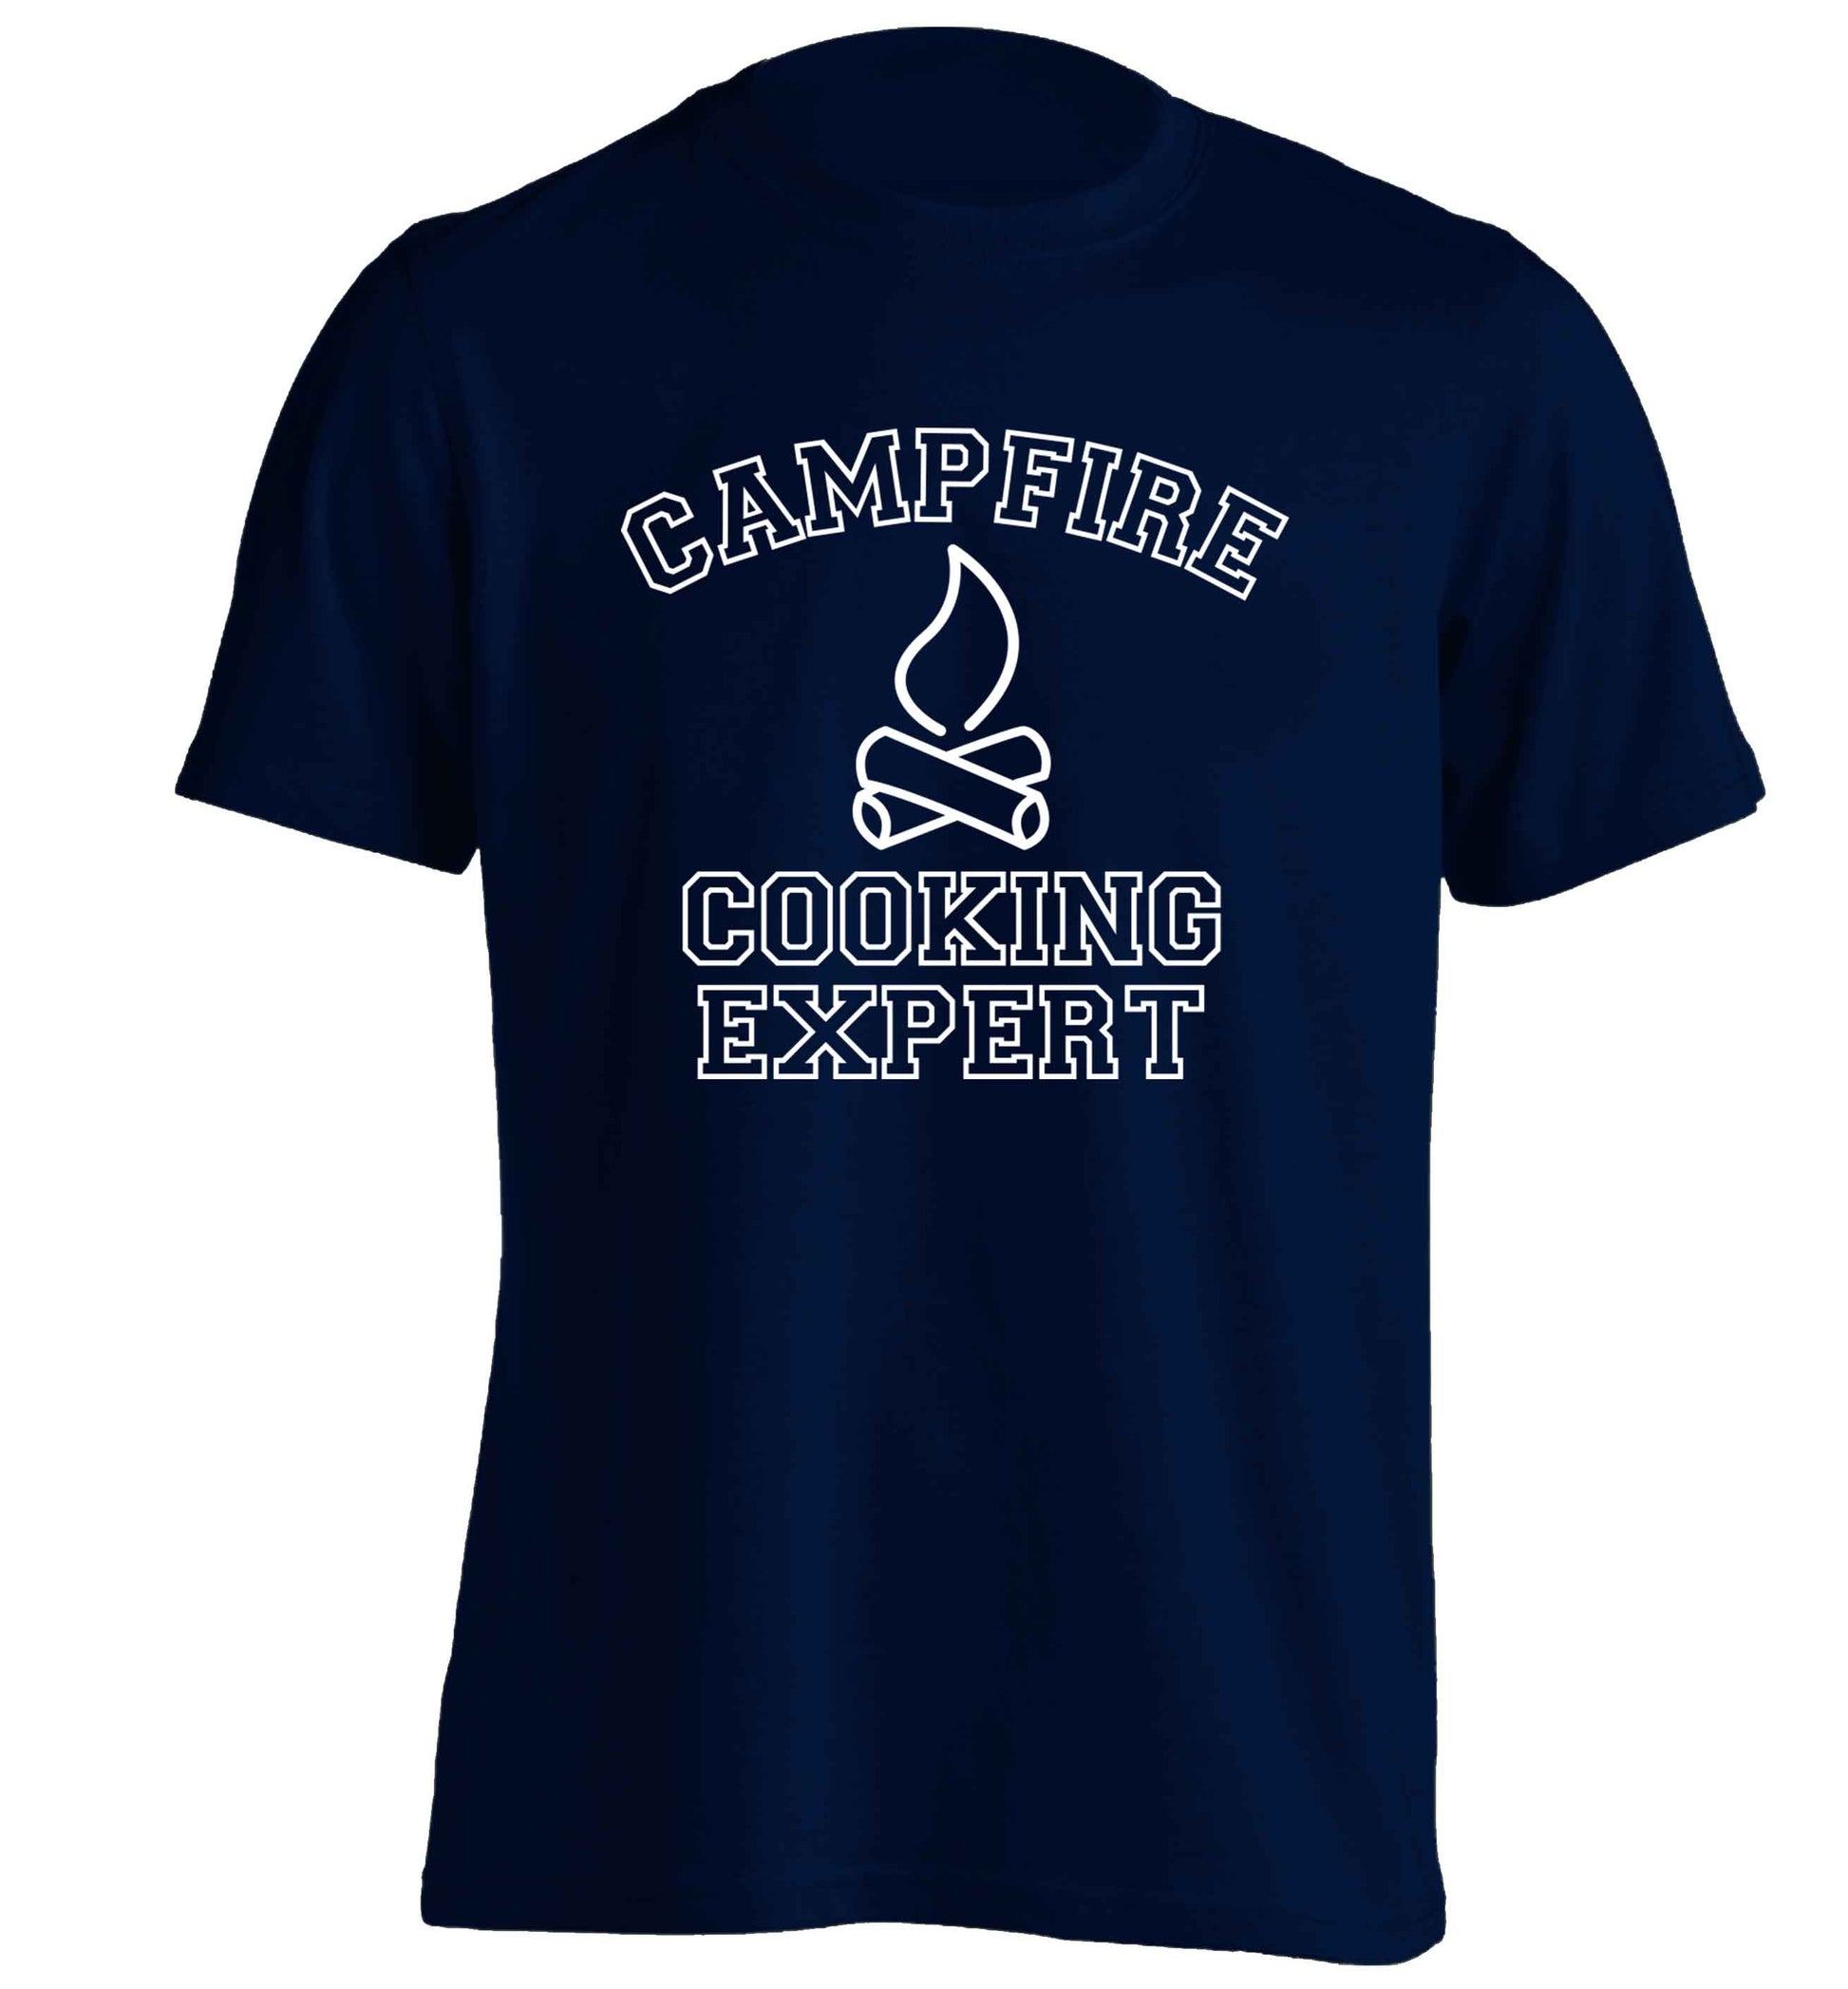 Campfire cooking expert adults unisex navy Tshirt 2XL